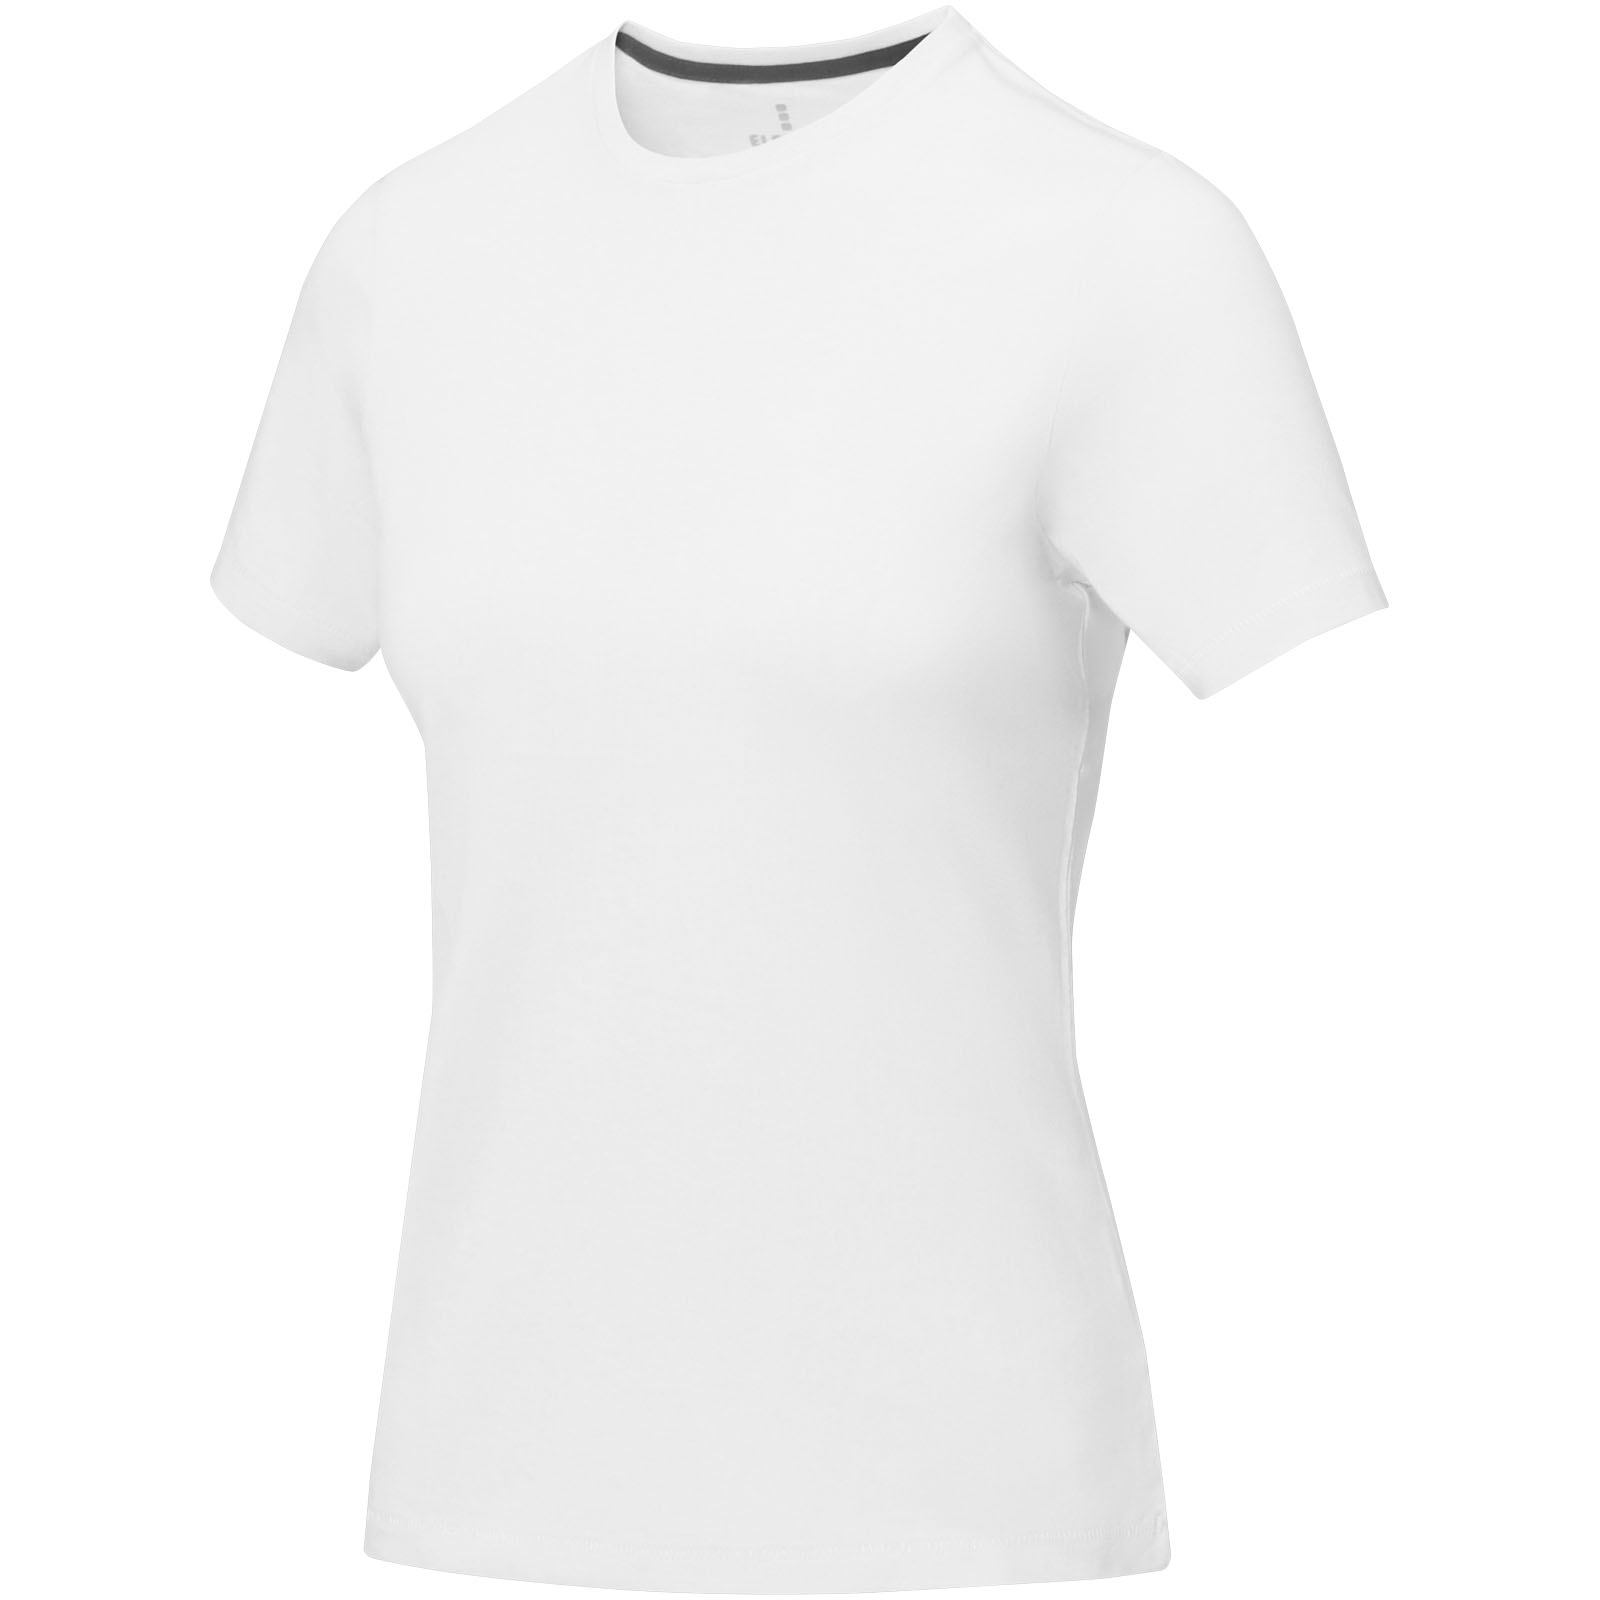 Advertising T-shirts - Nanaimo short sleeve women's t-shirt